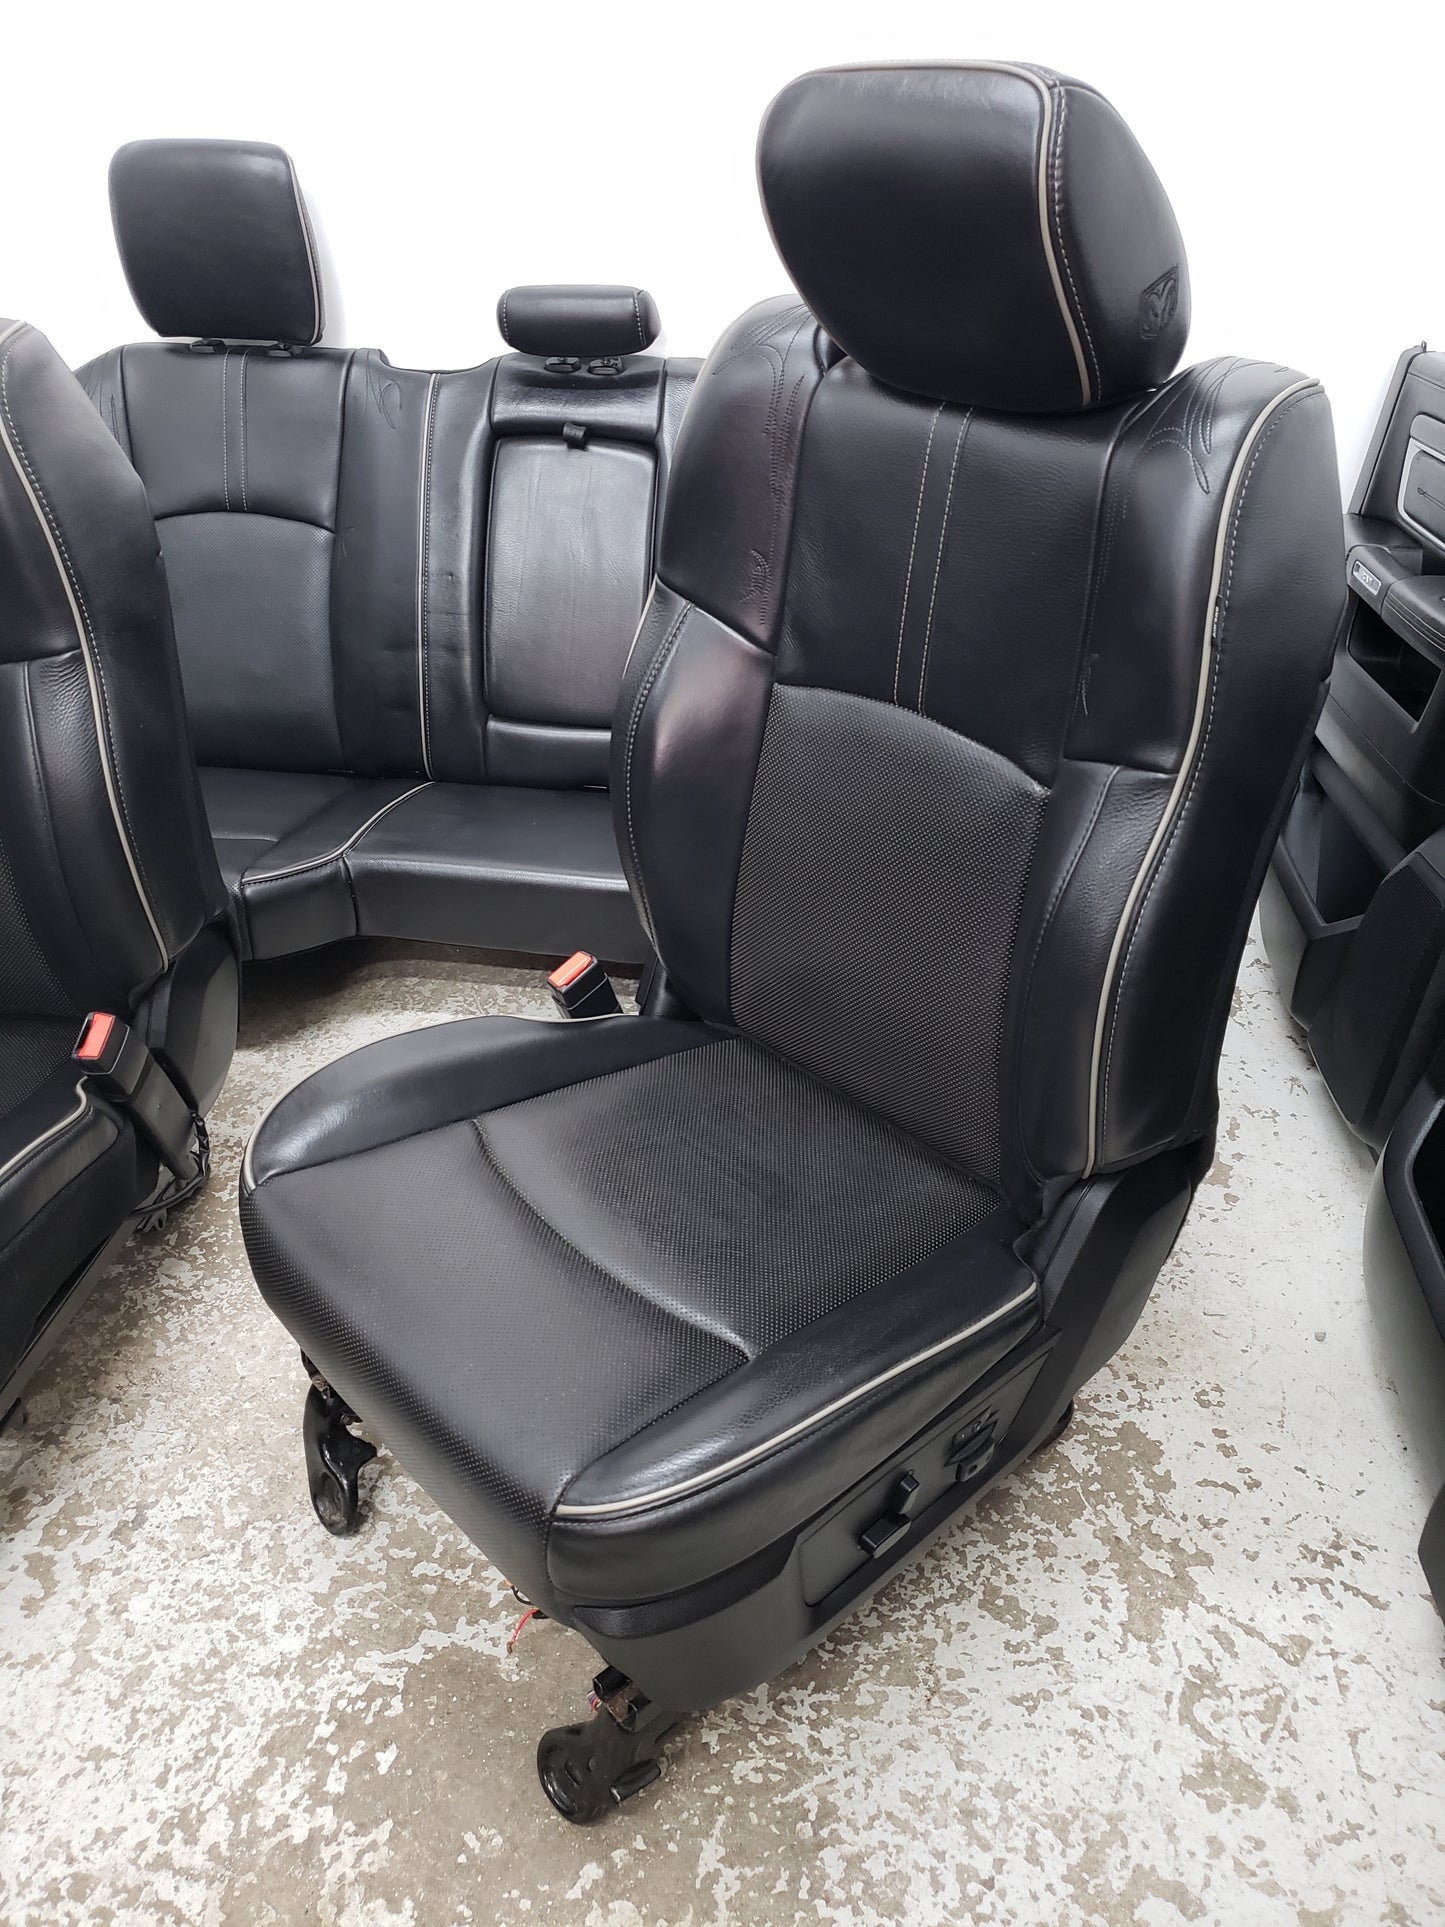 Dodge Ram 2015 Laramie Limited BLACK LEATHER Truck Seats Interior